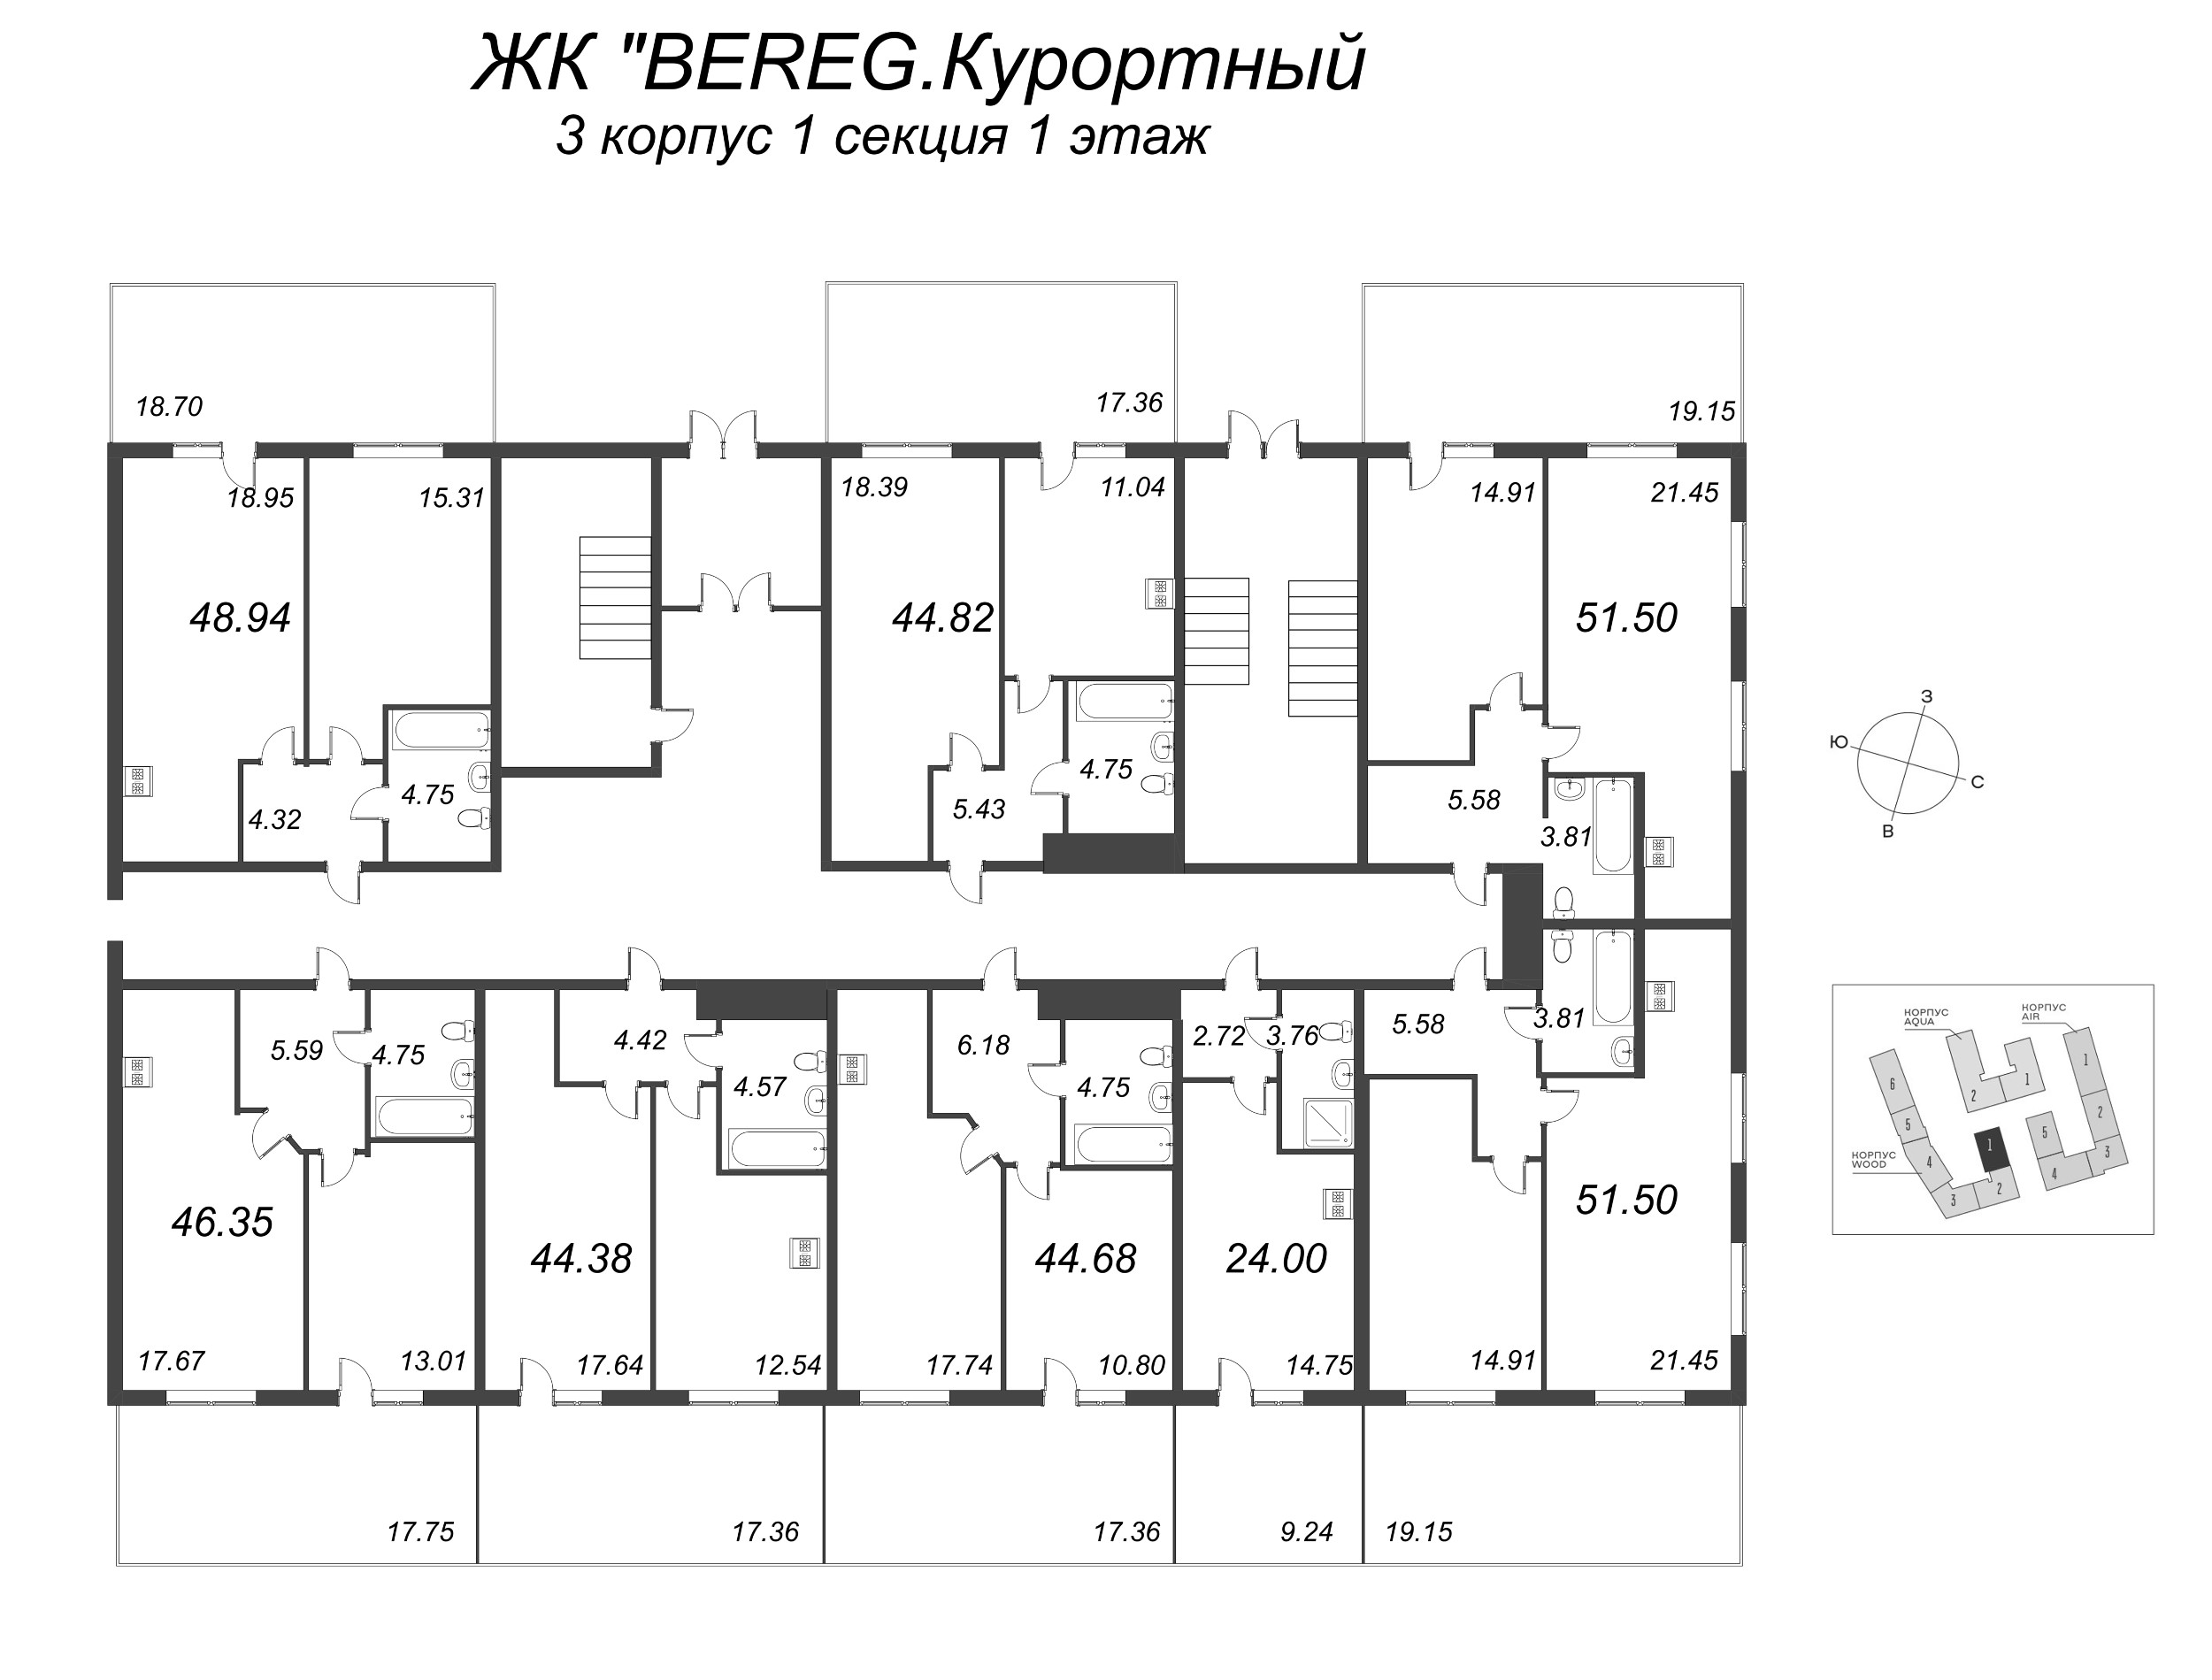 2-комнатная (Евро) квартира, 48.94 м² - планировка этажа